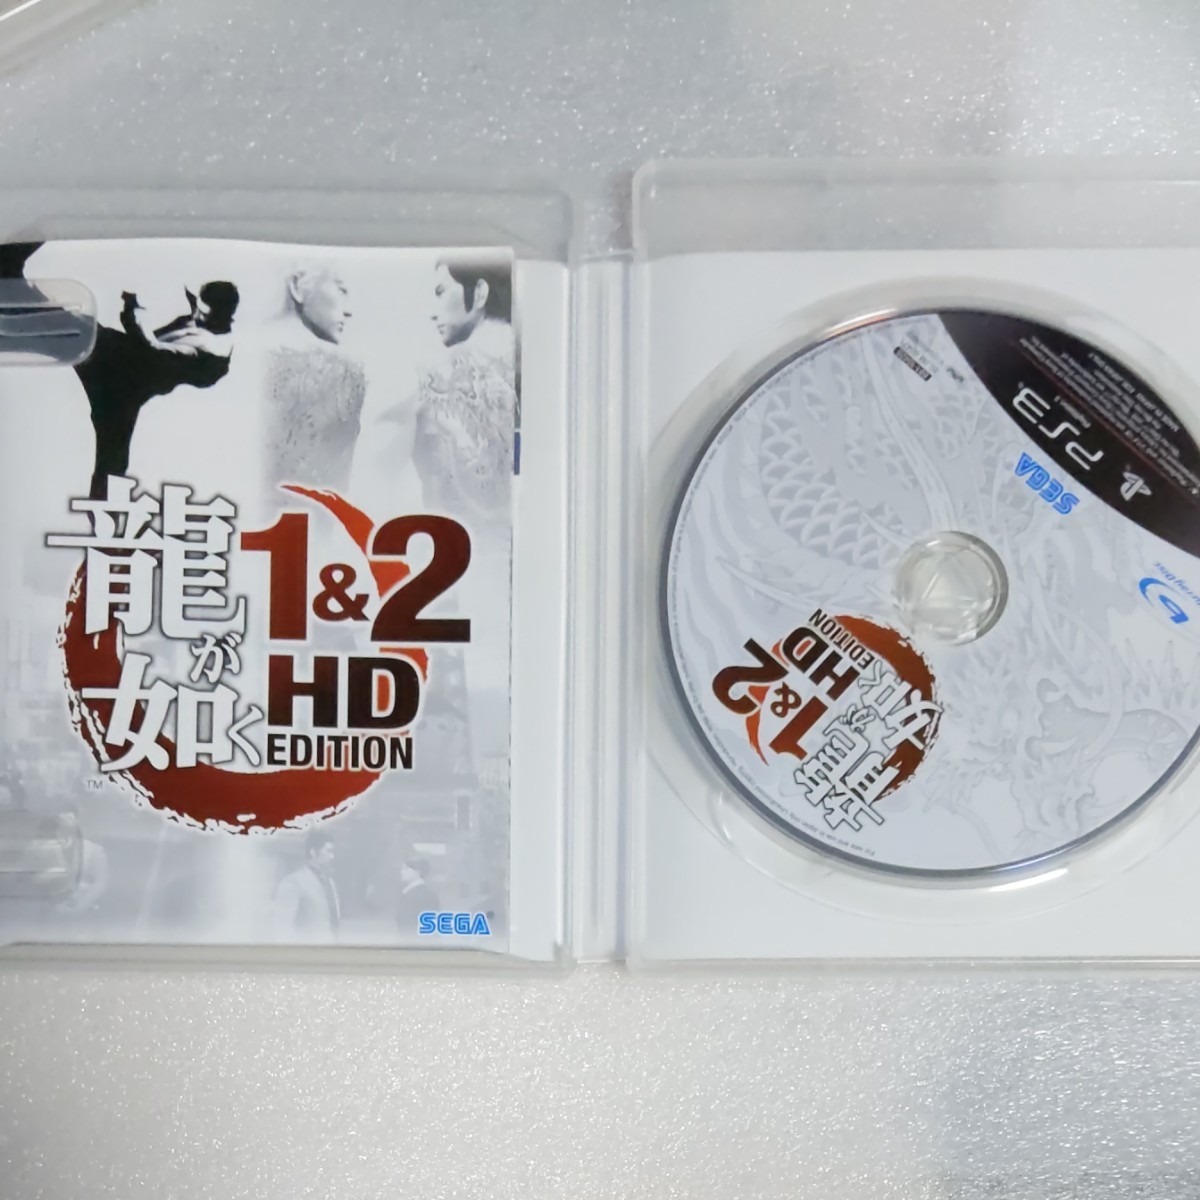 【PS3】 龍が如く 1＆2 HD EDITION と龍が如く3の2本セット販売